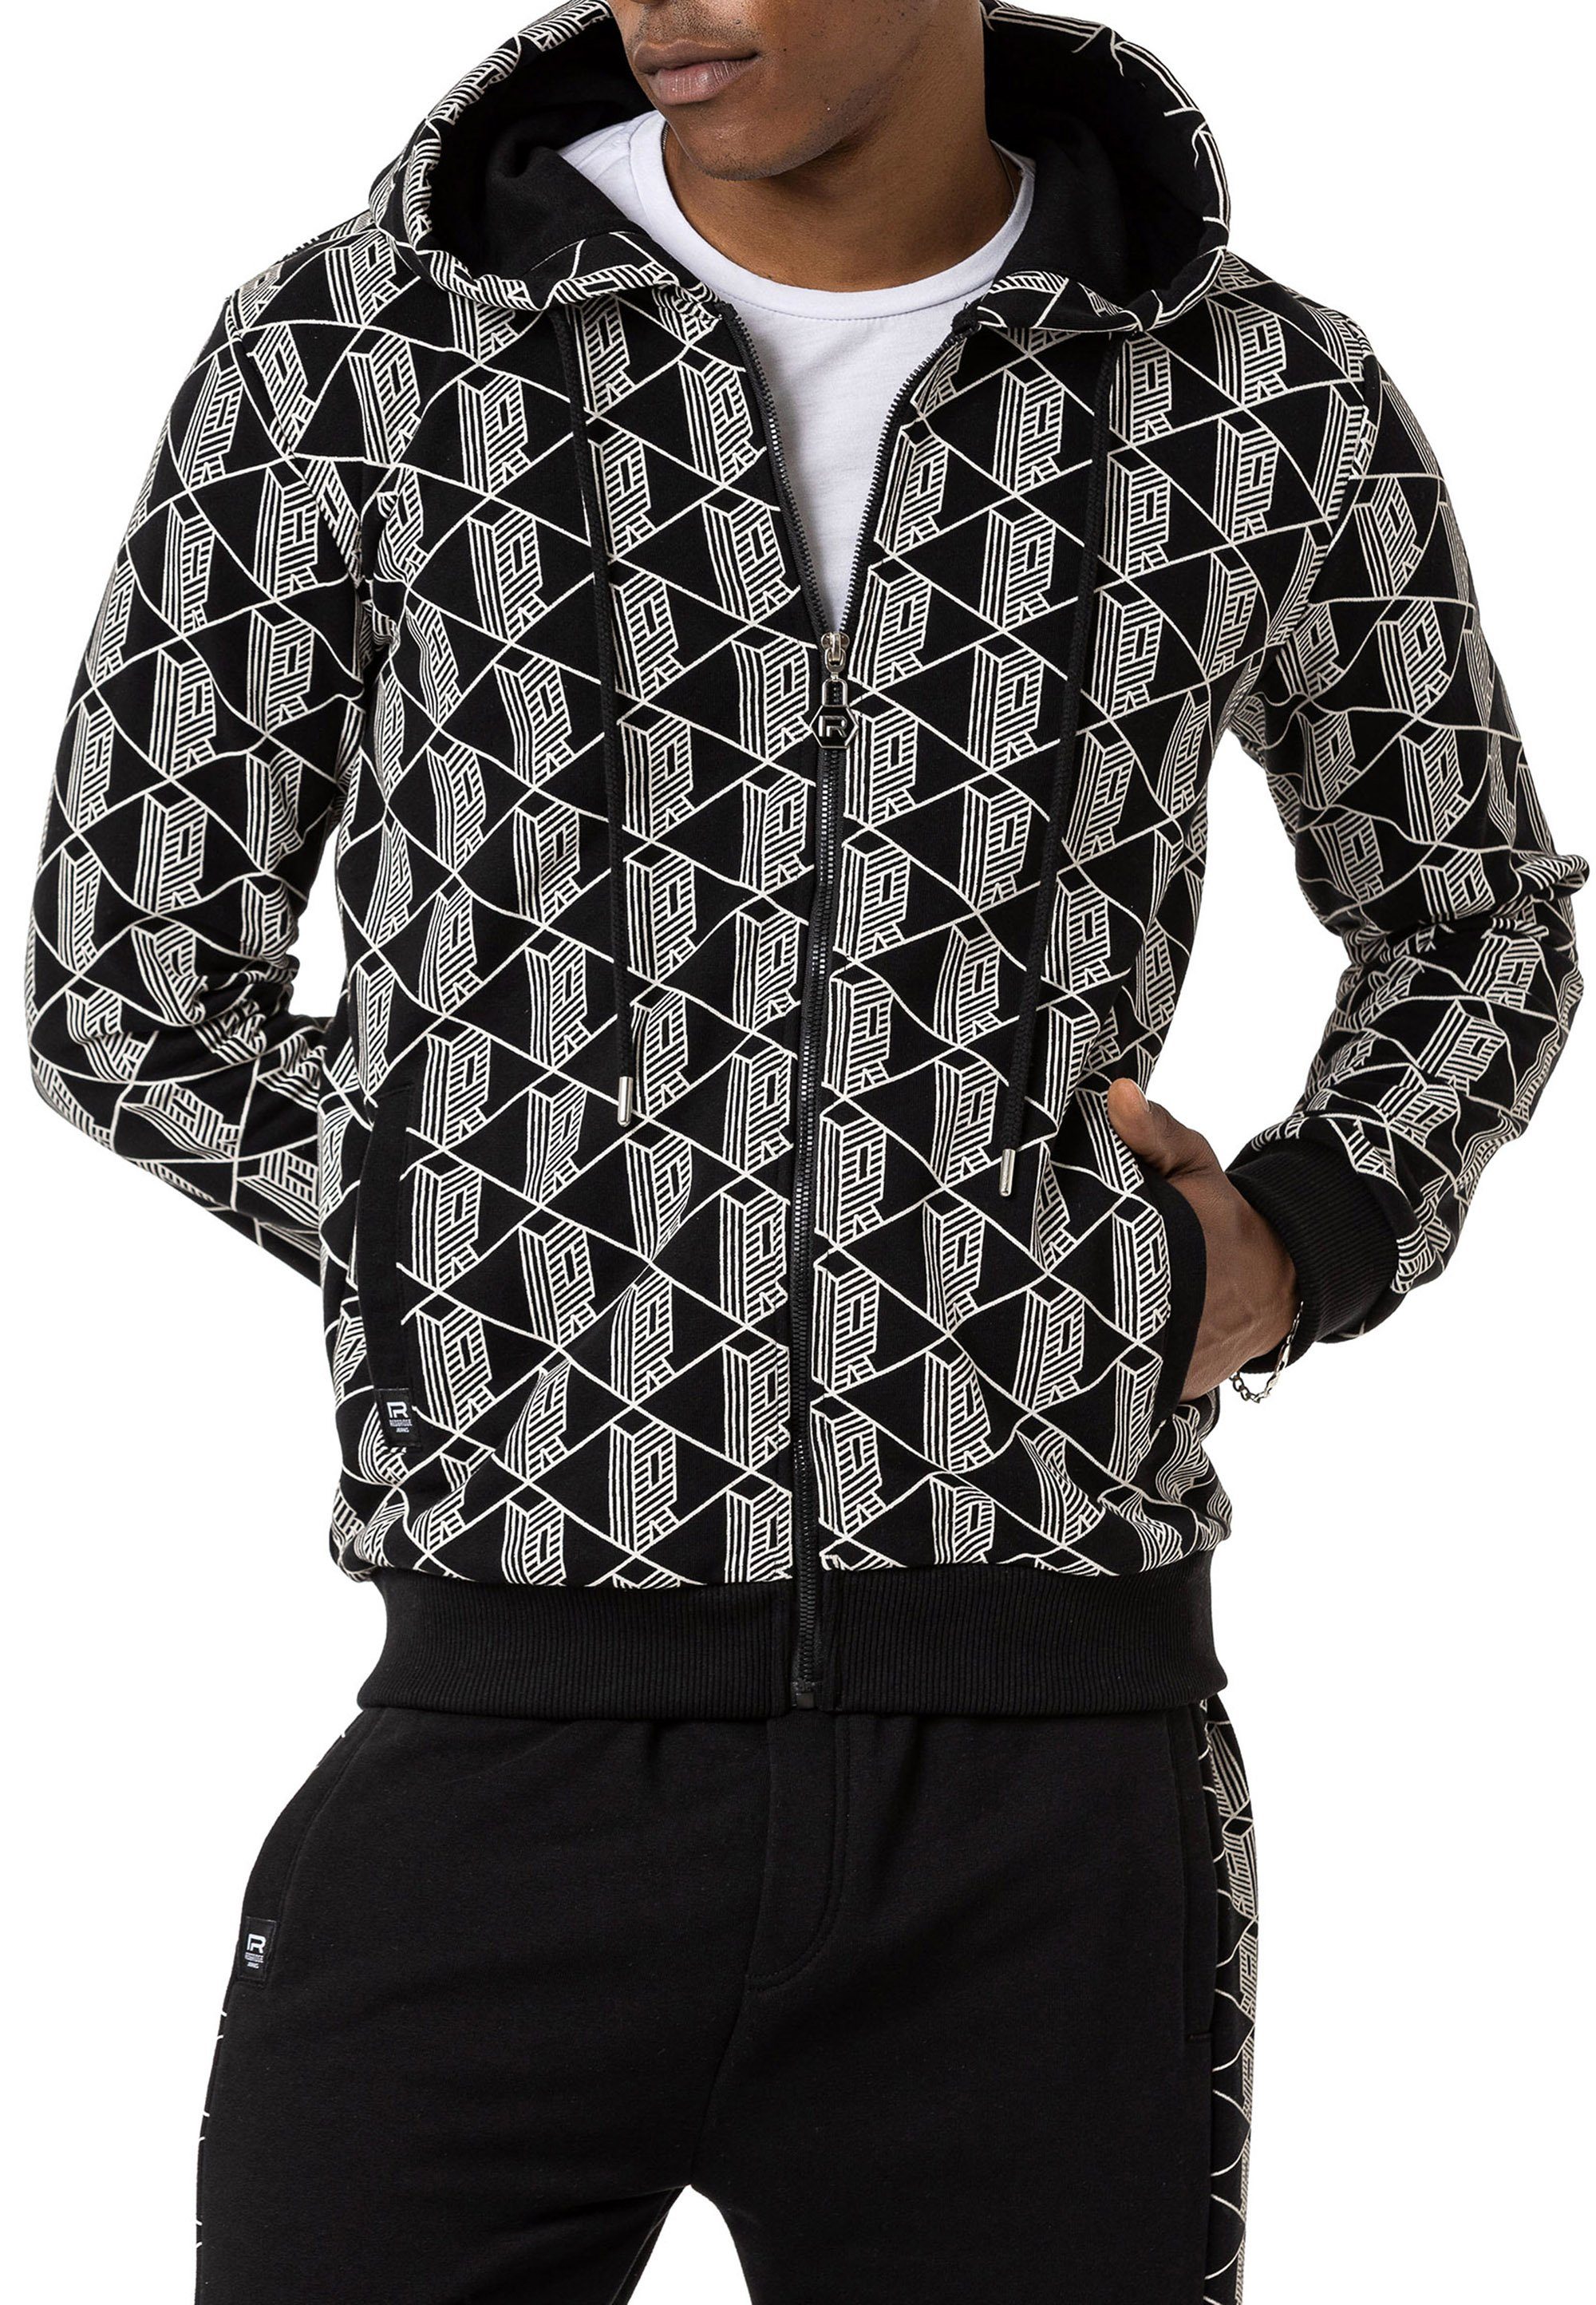 RedBridge Kapuzensweatjacke Sweater mit Kapuze 3D Allover-Print Premium Qualität